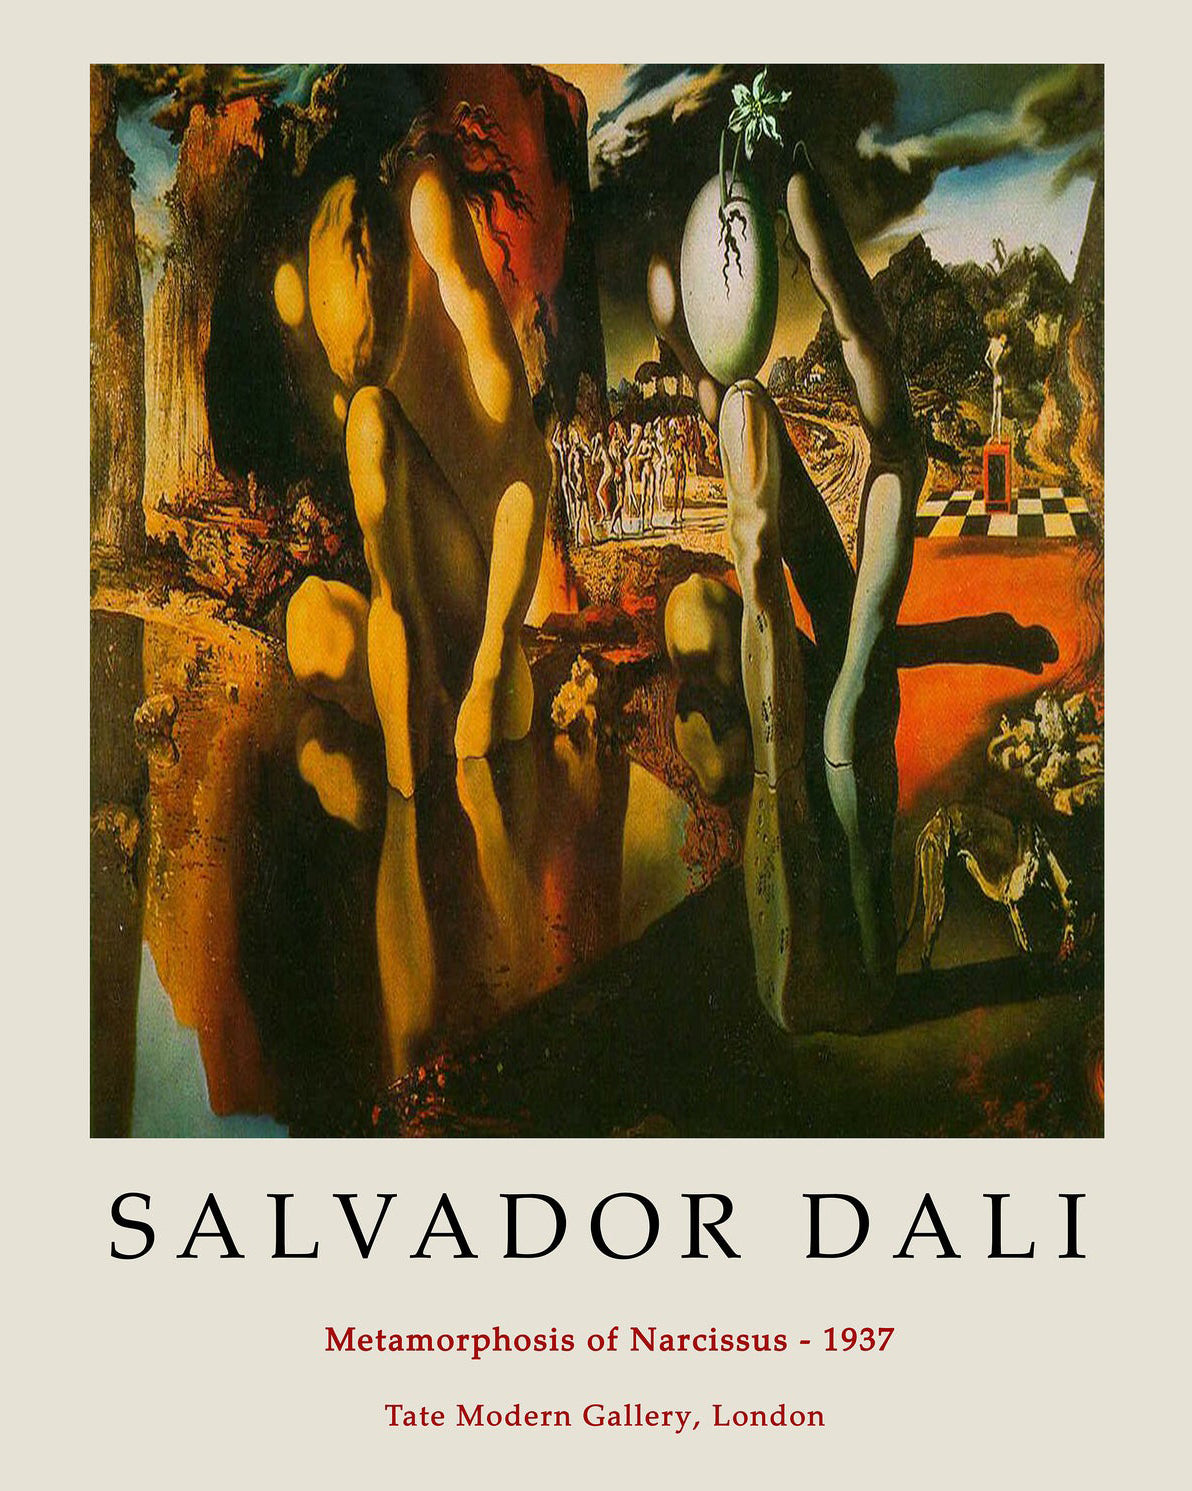 Salvador Dali Poster